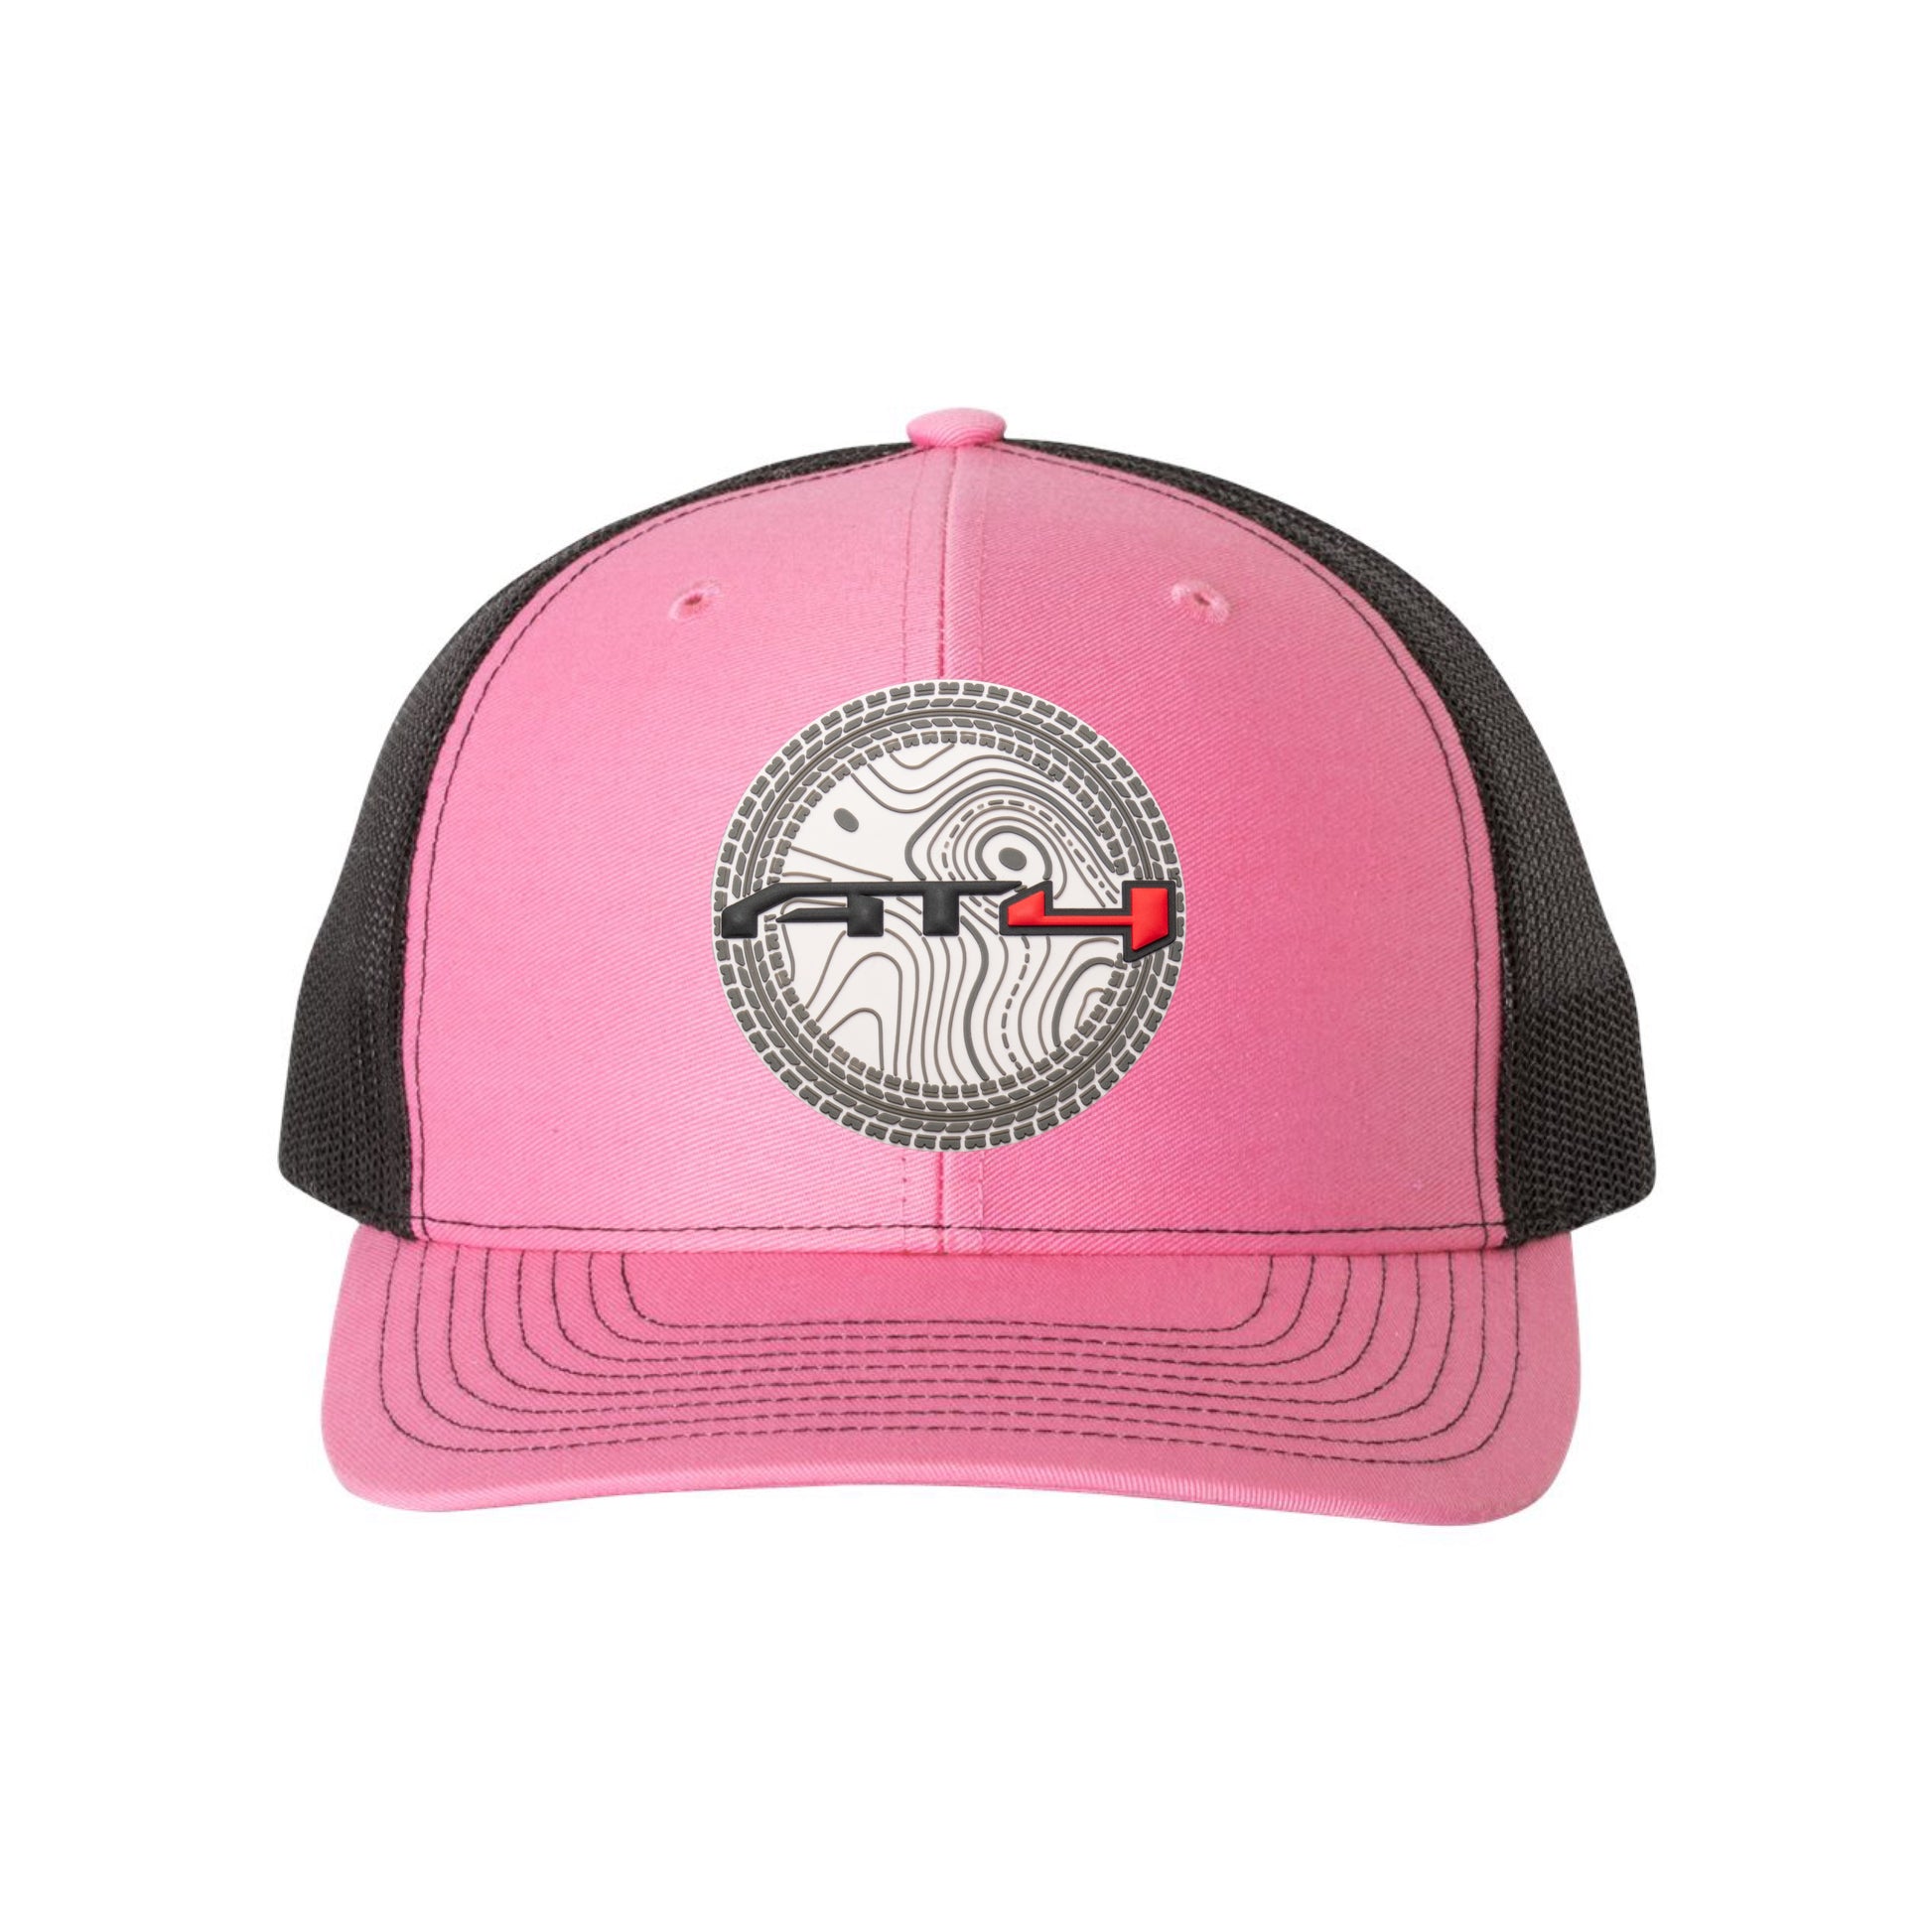 AT4 3D Snapback Trucker Hat- Hot Pink/ Black - Ten Gallon Hat Co.